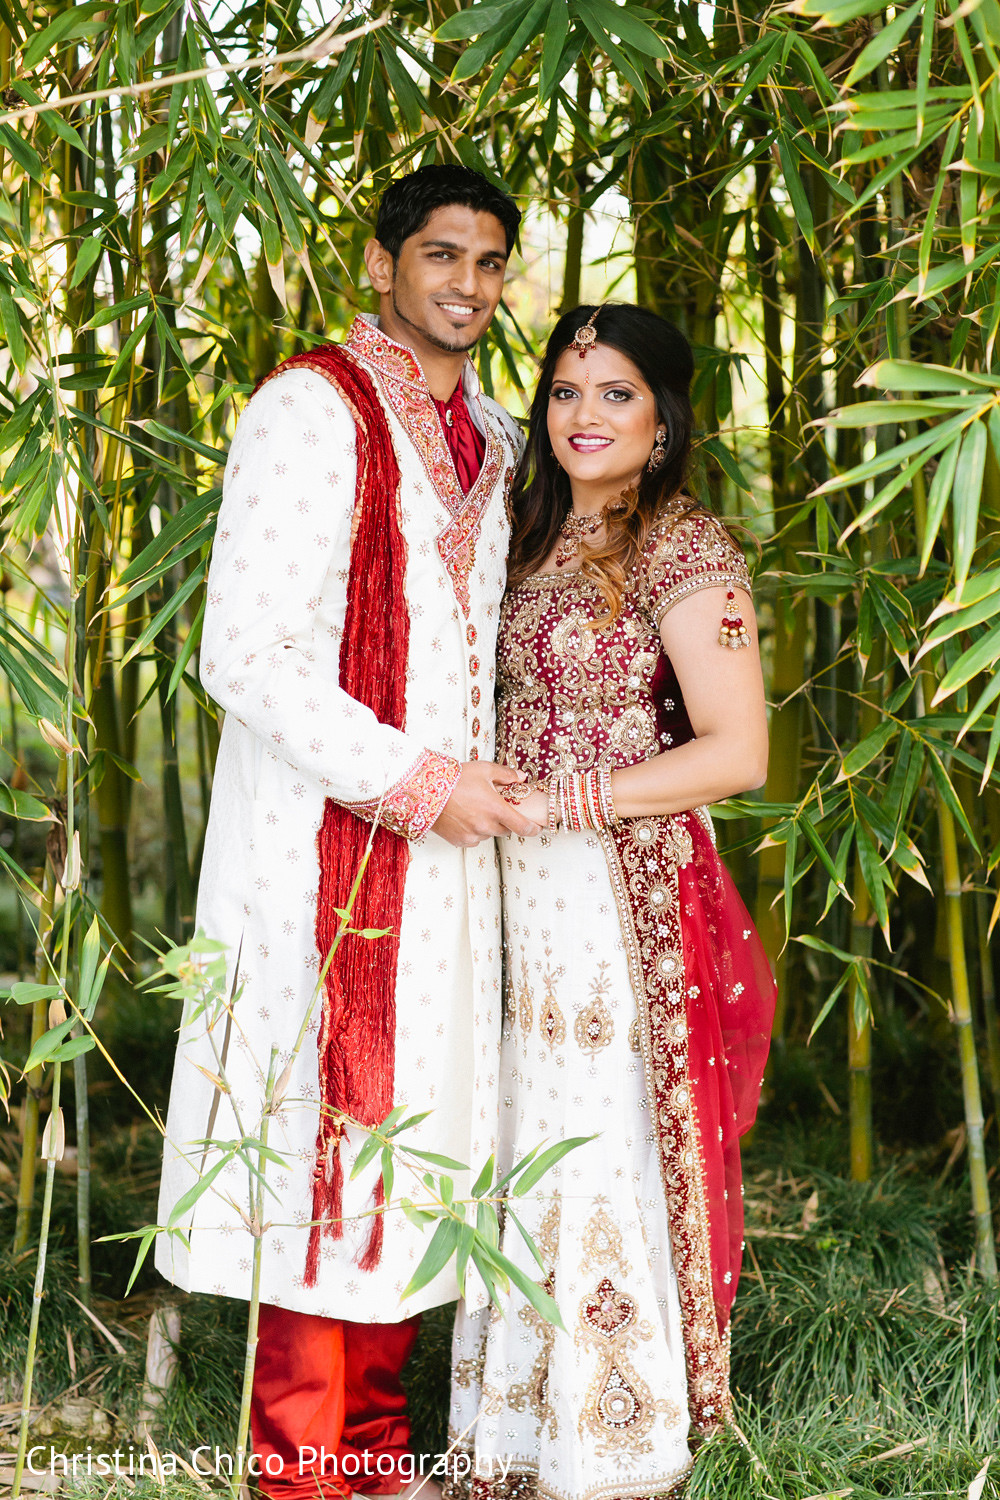 Orange County Indian wedding of Mauna and Vishal's Wedding – Part I - The Indian  Wedding Blog and Magazine